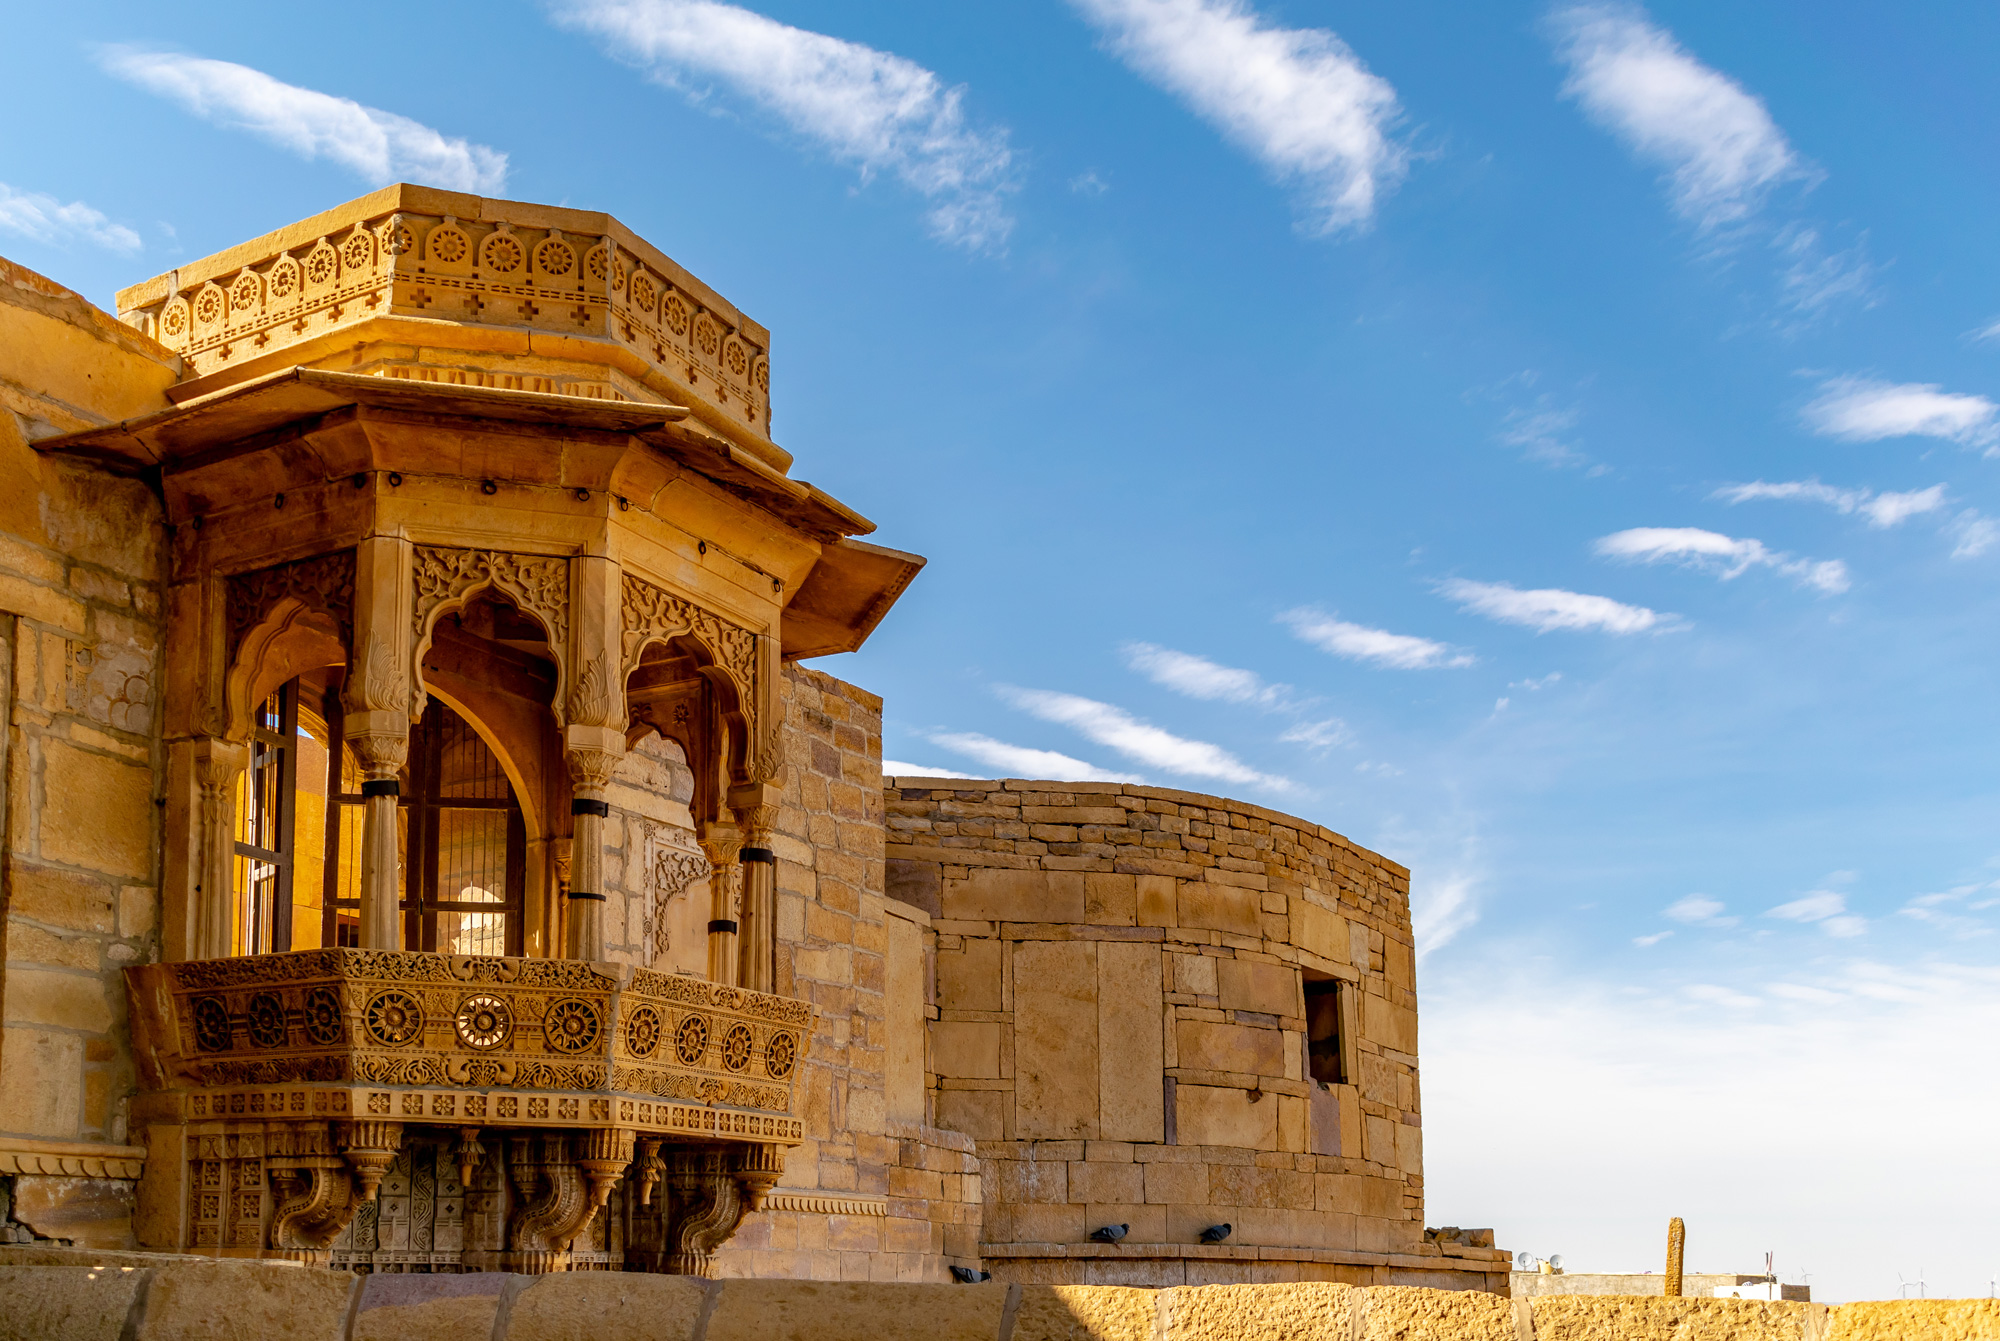 Day 5 - Jaisalmer: The Golden City